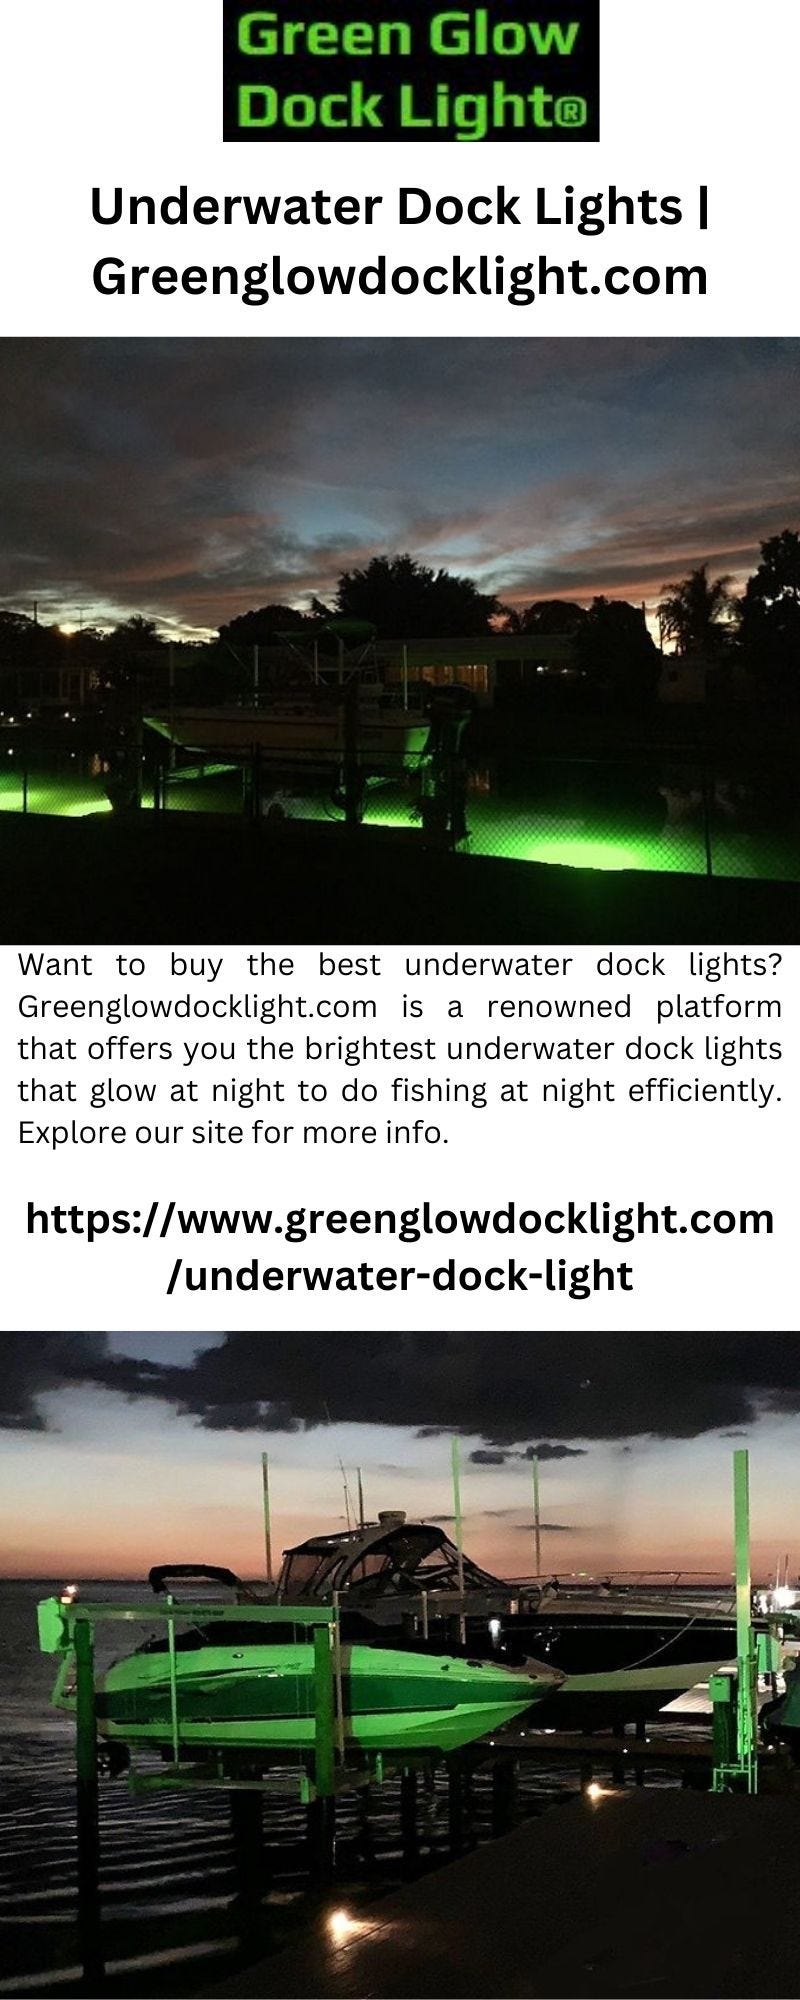 Underwater Dock Lights  Greenglowdocklight.com - Green Glow Dock Light LLC  - Medium